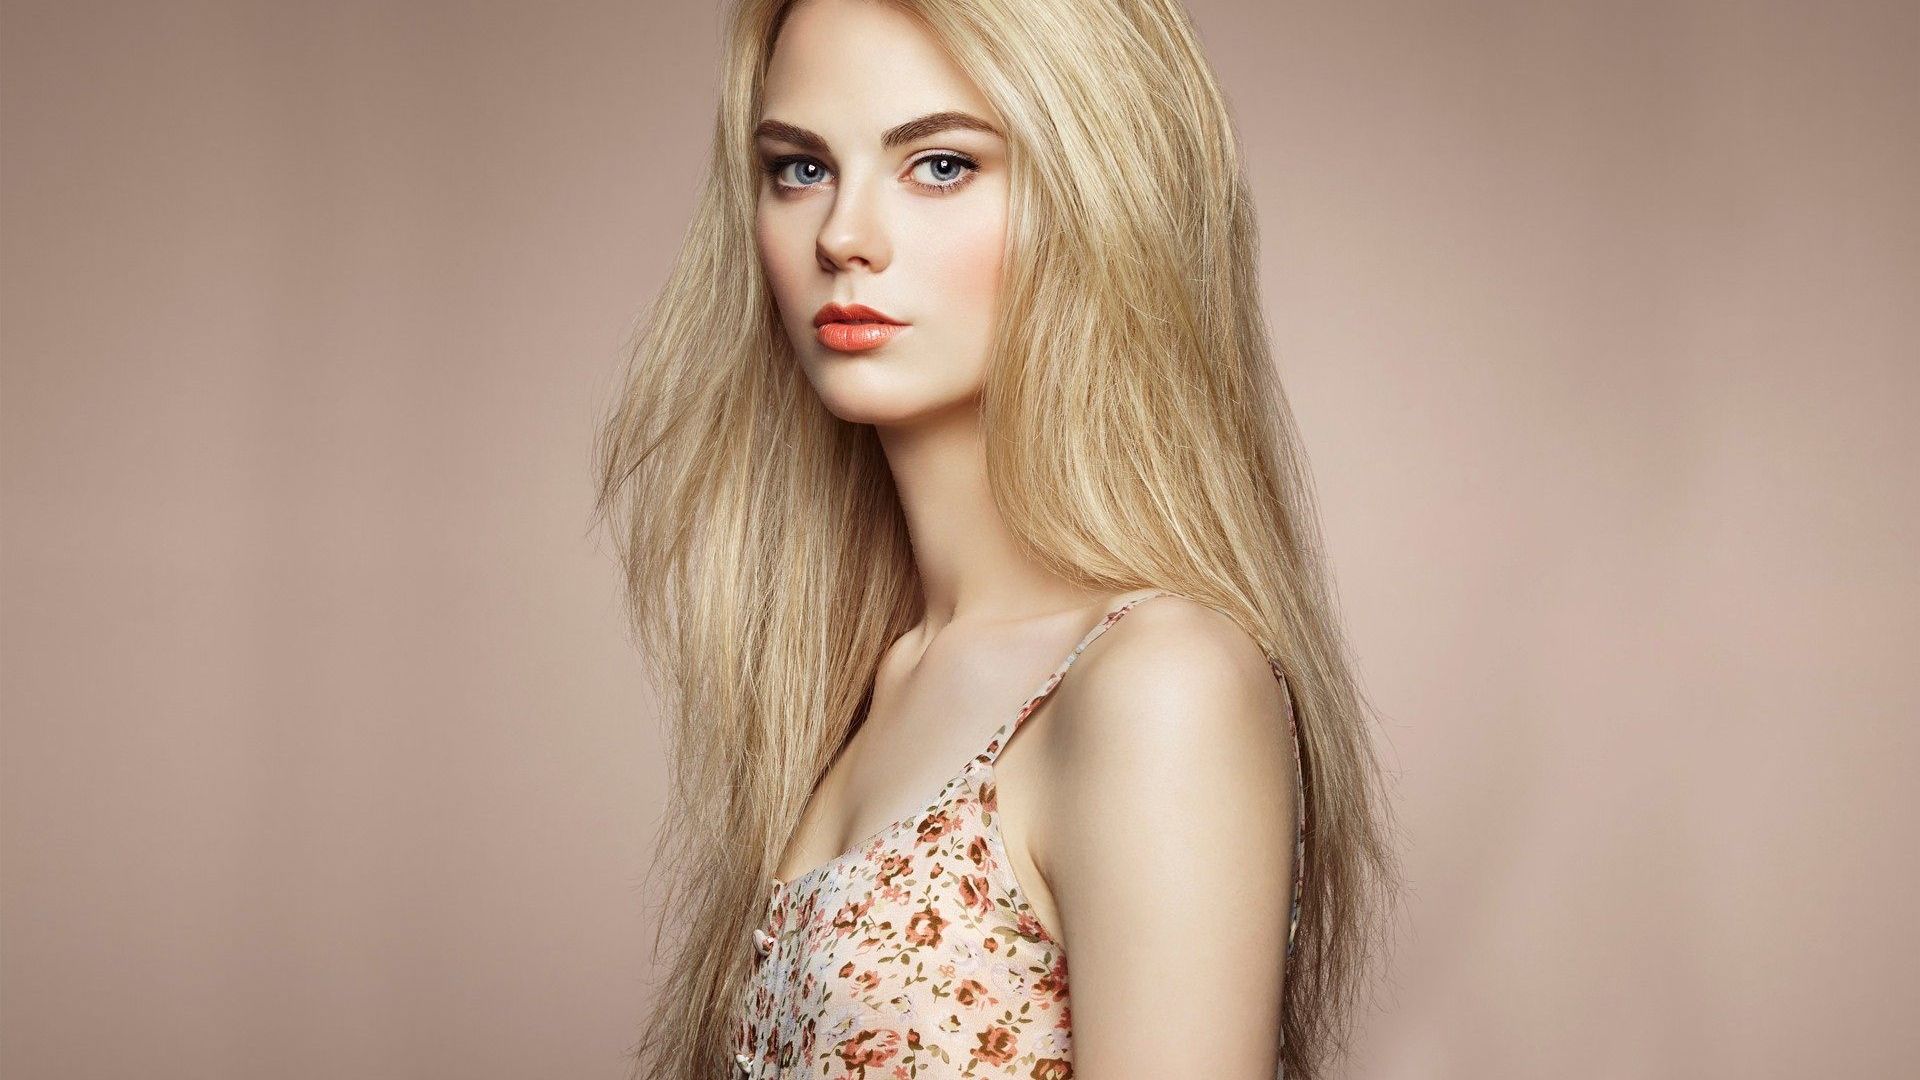 Wallpaper Beautiful and cute, blonde, model